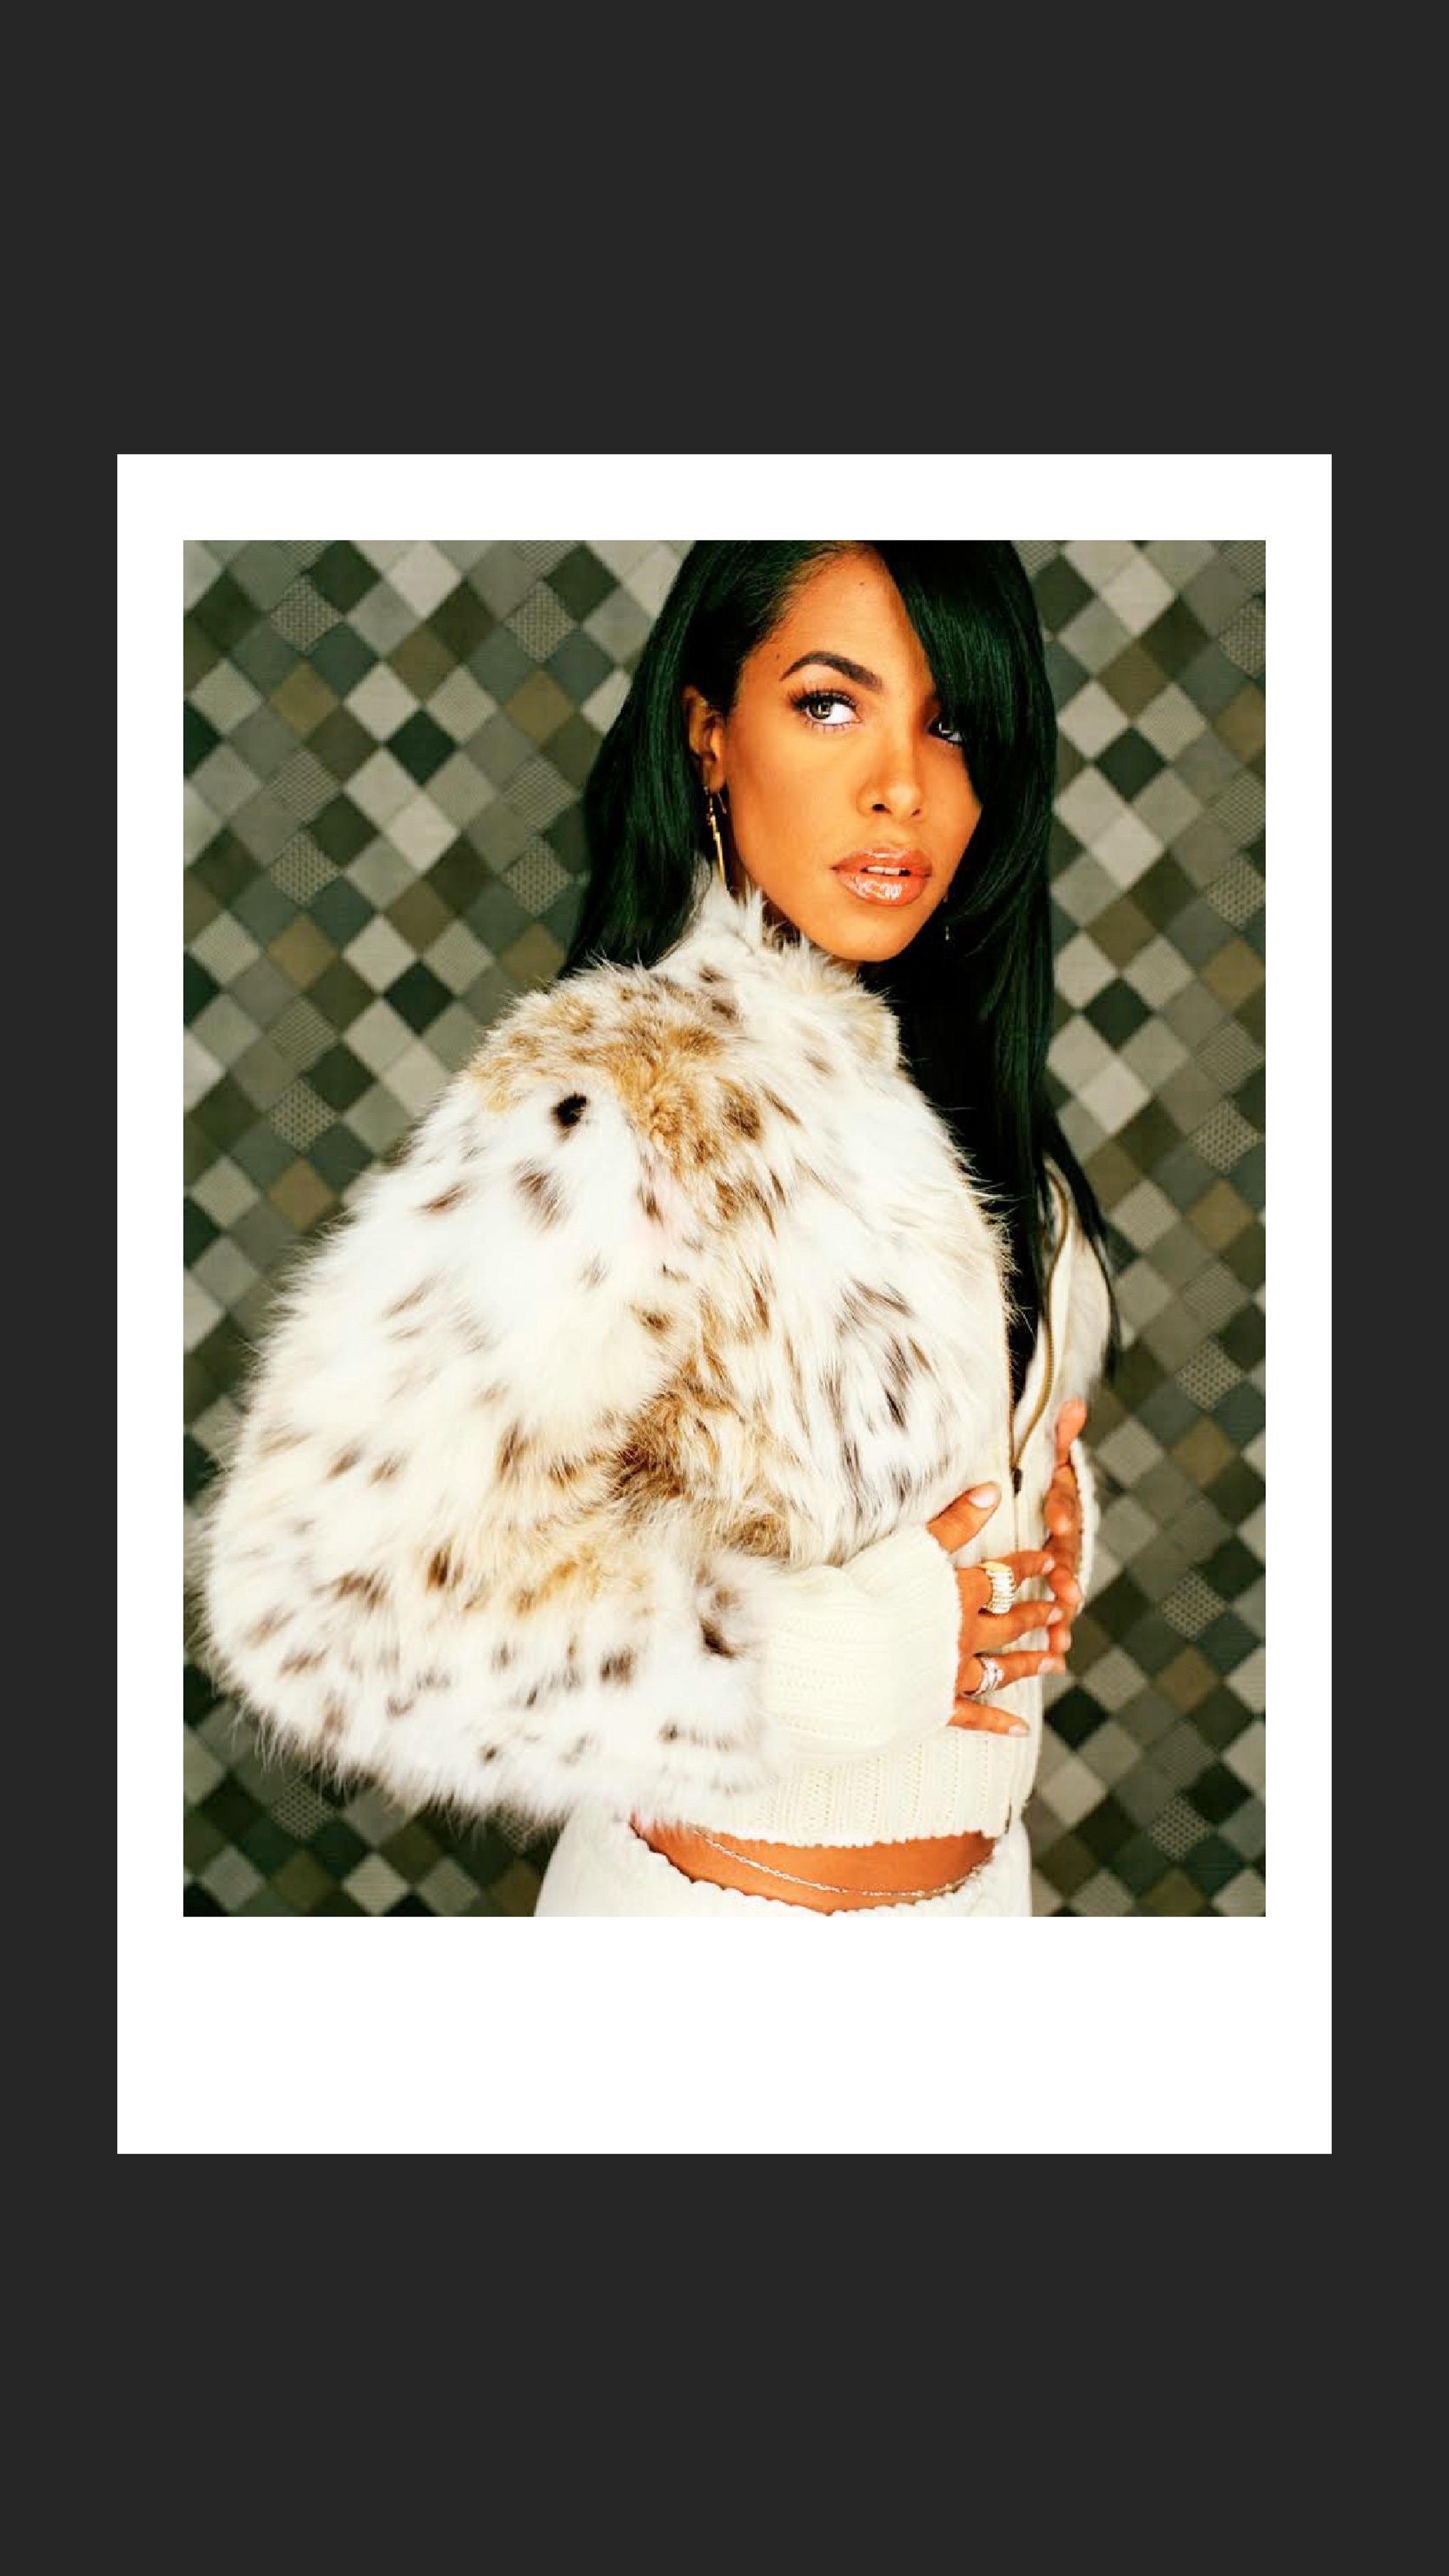 Alternate View 1 of Aaliyah “I Care 4 U” Print